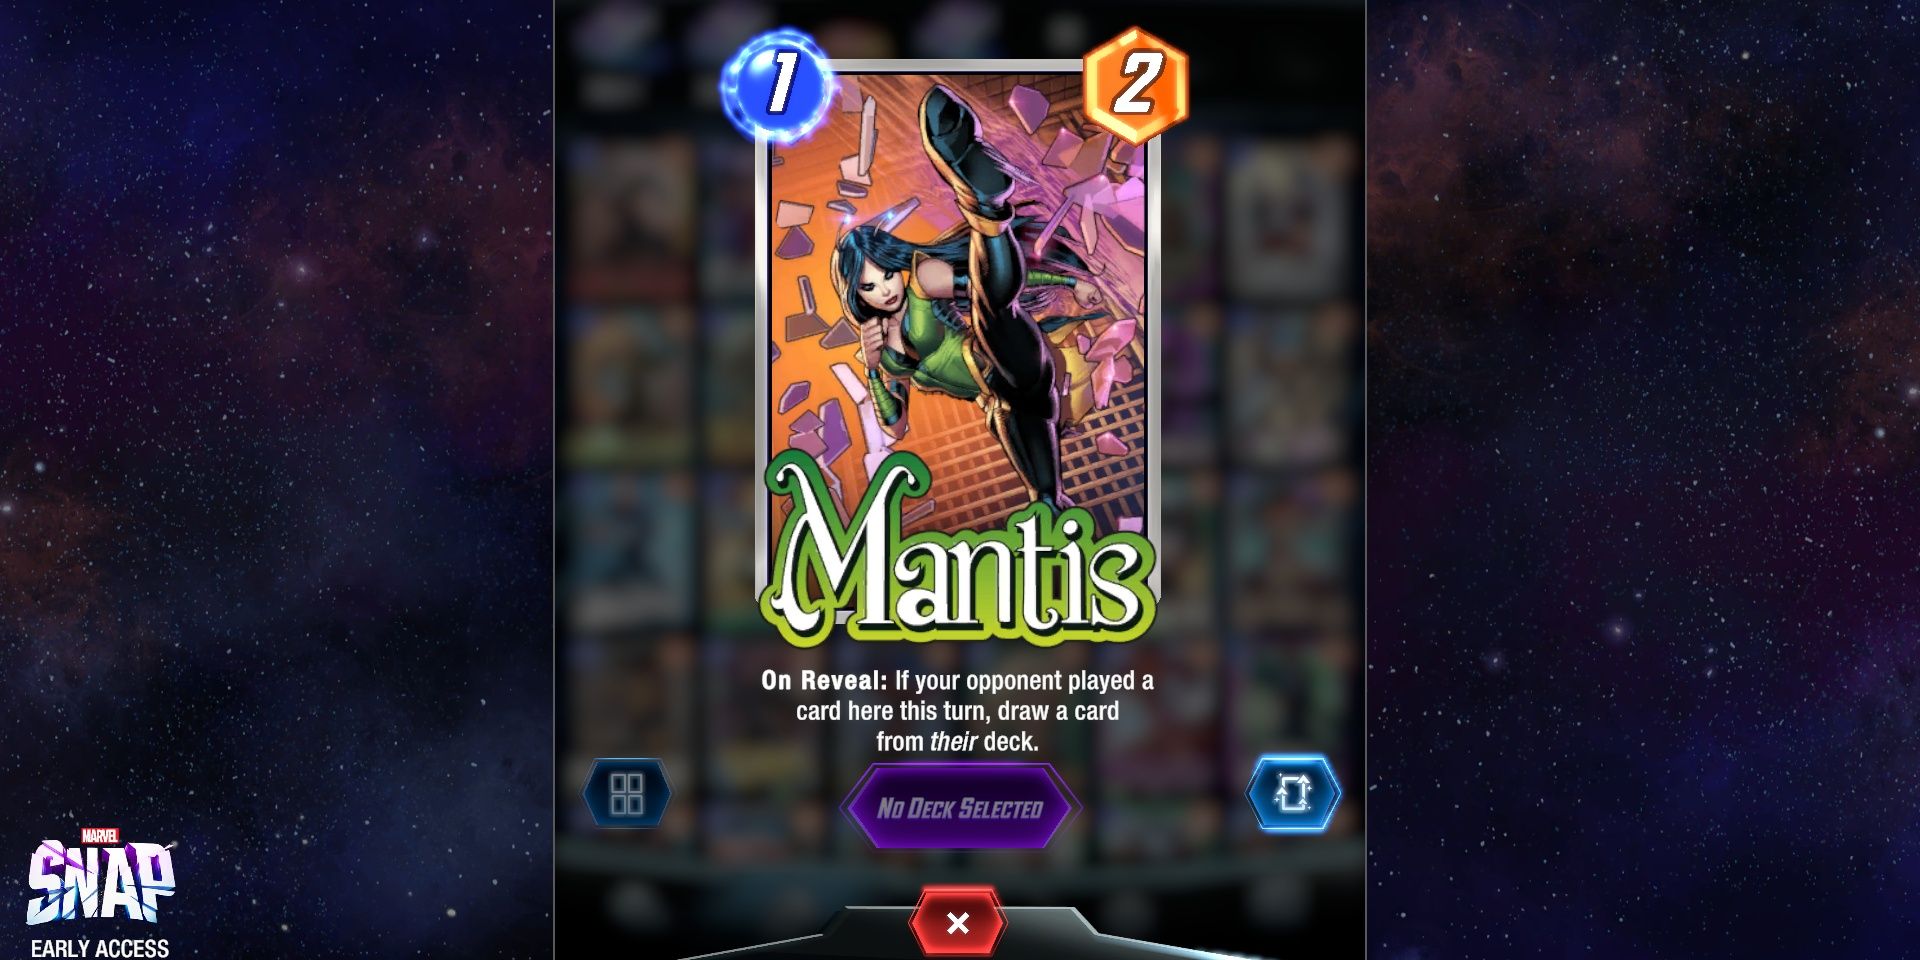 Mantis' Card in Marvel Snap.